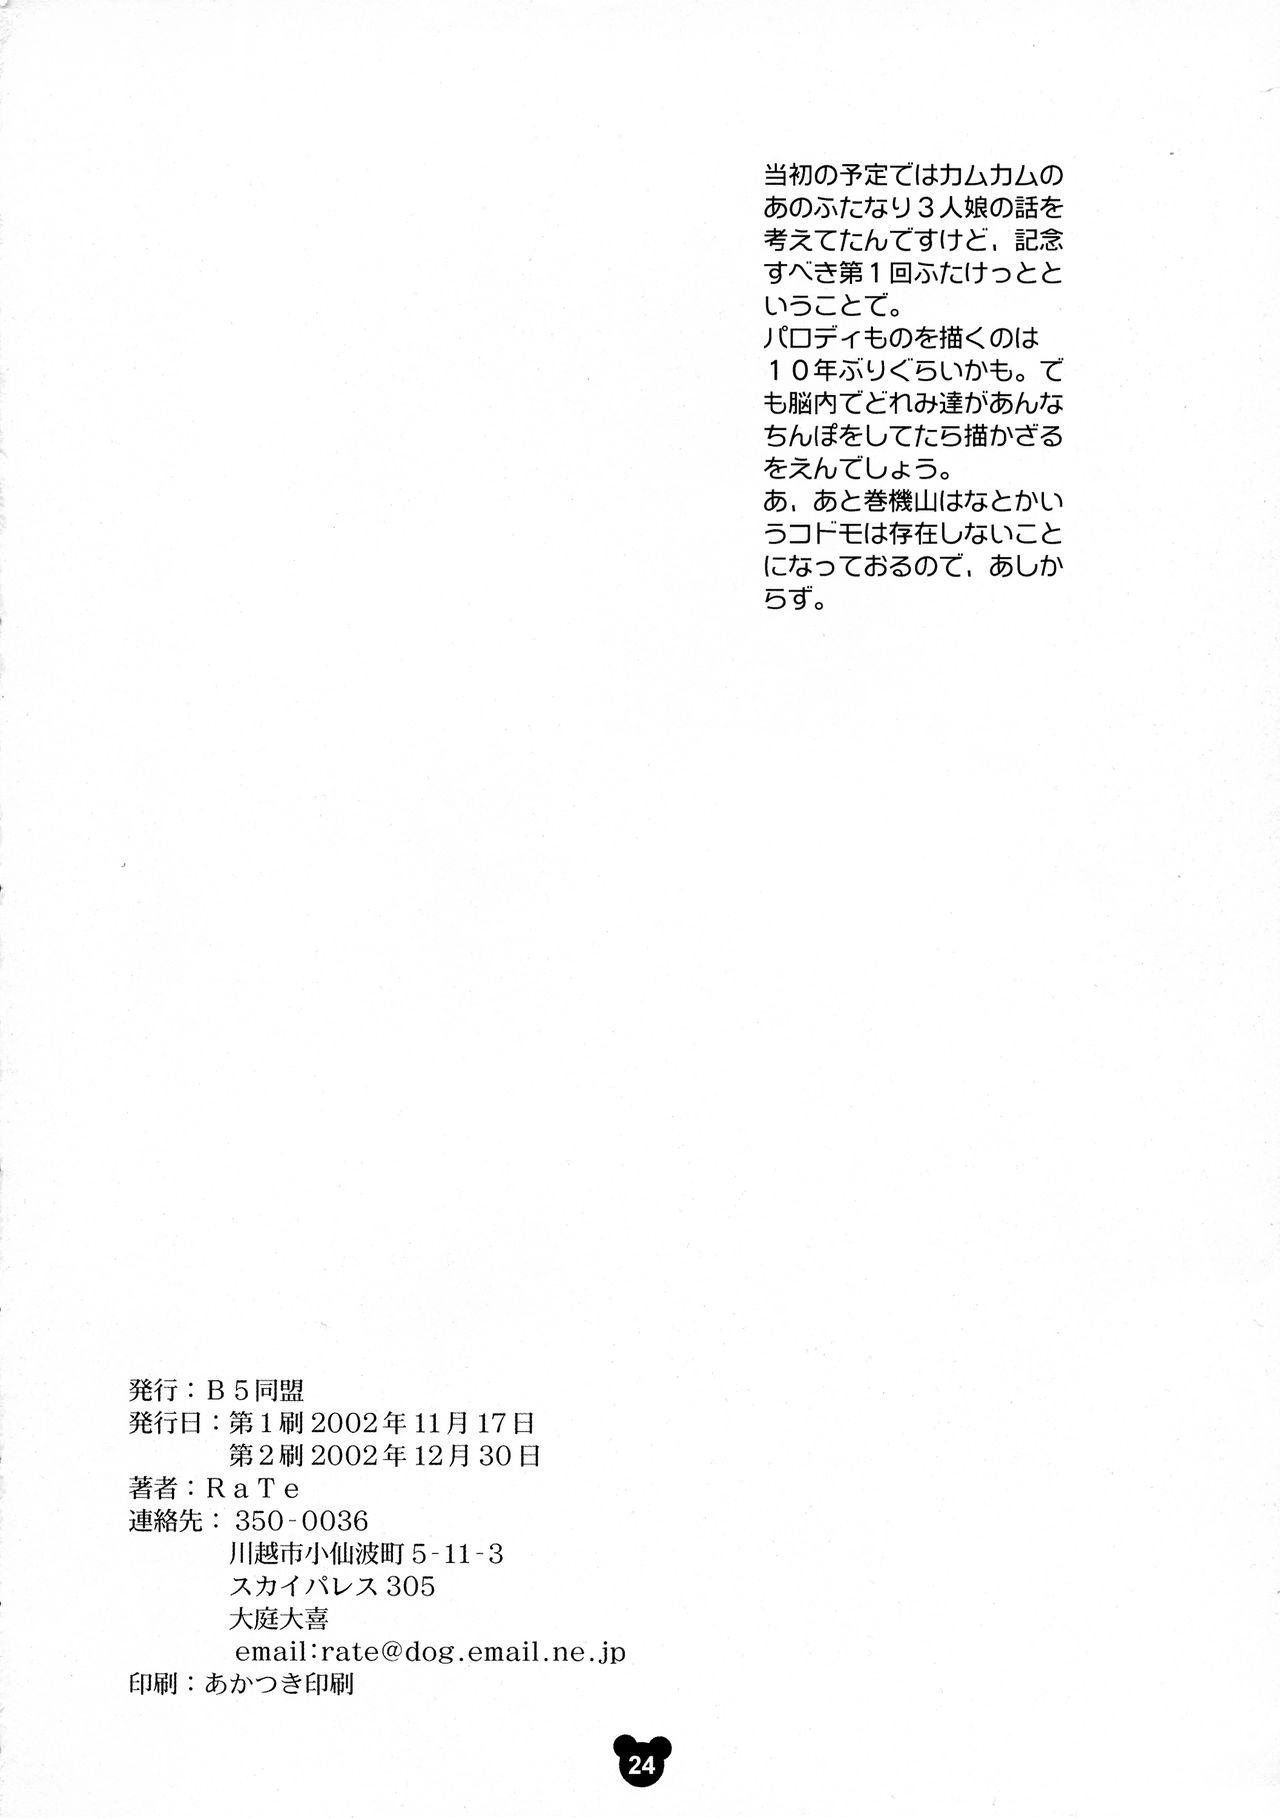 Phat Futamajo Doremi - Ojamajo doremi Outside - Page 22